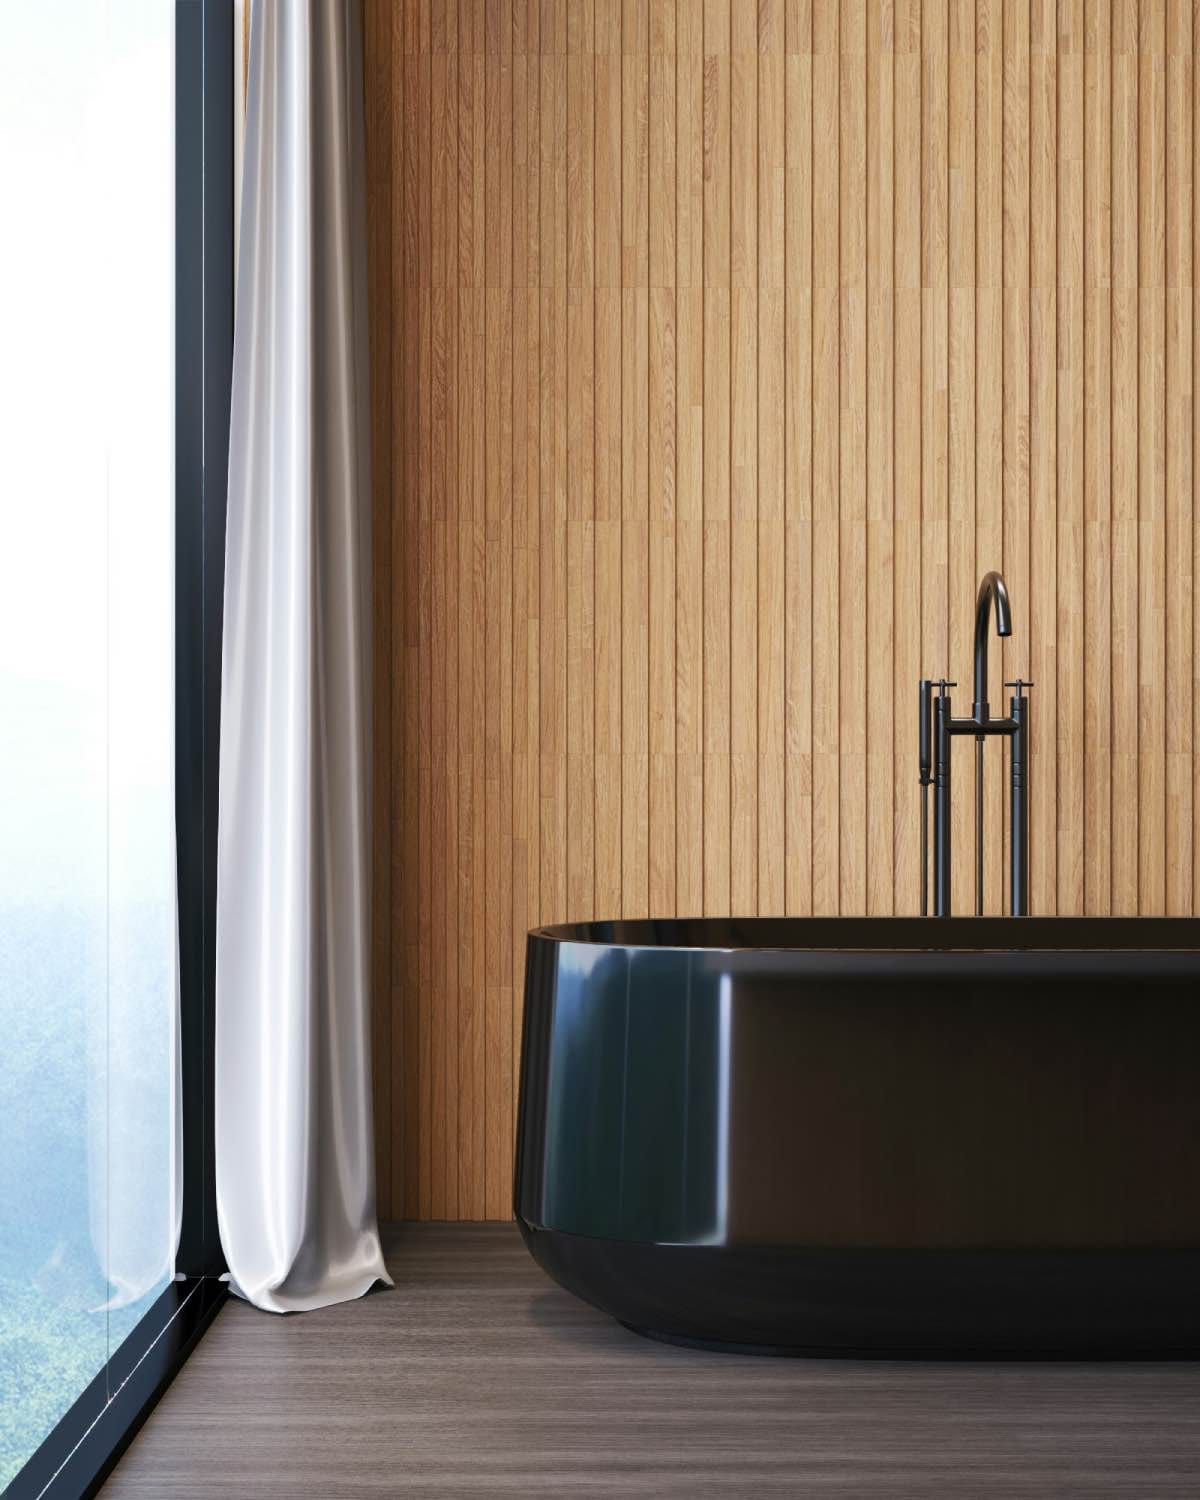 cuarto de baño moderno con bañera negra y grifo negro, pared madera